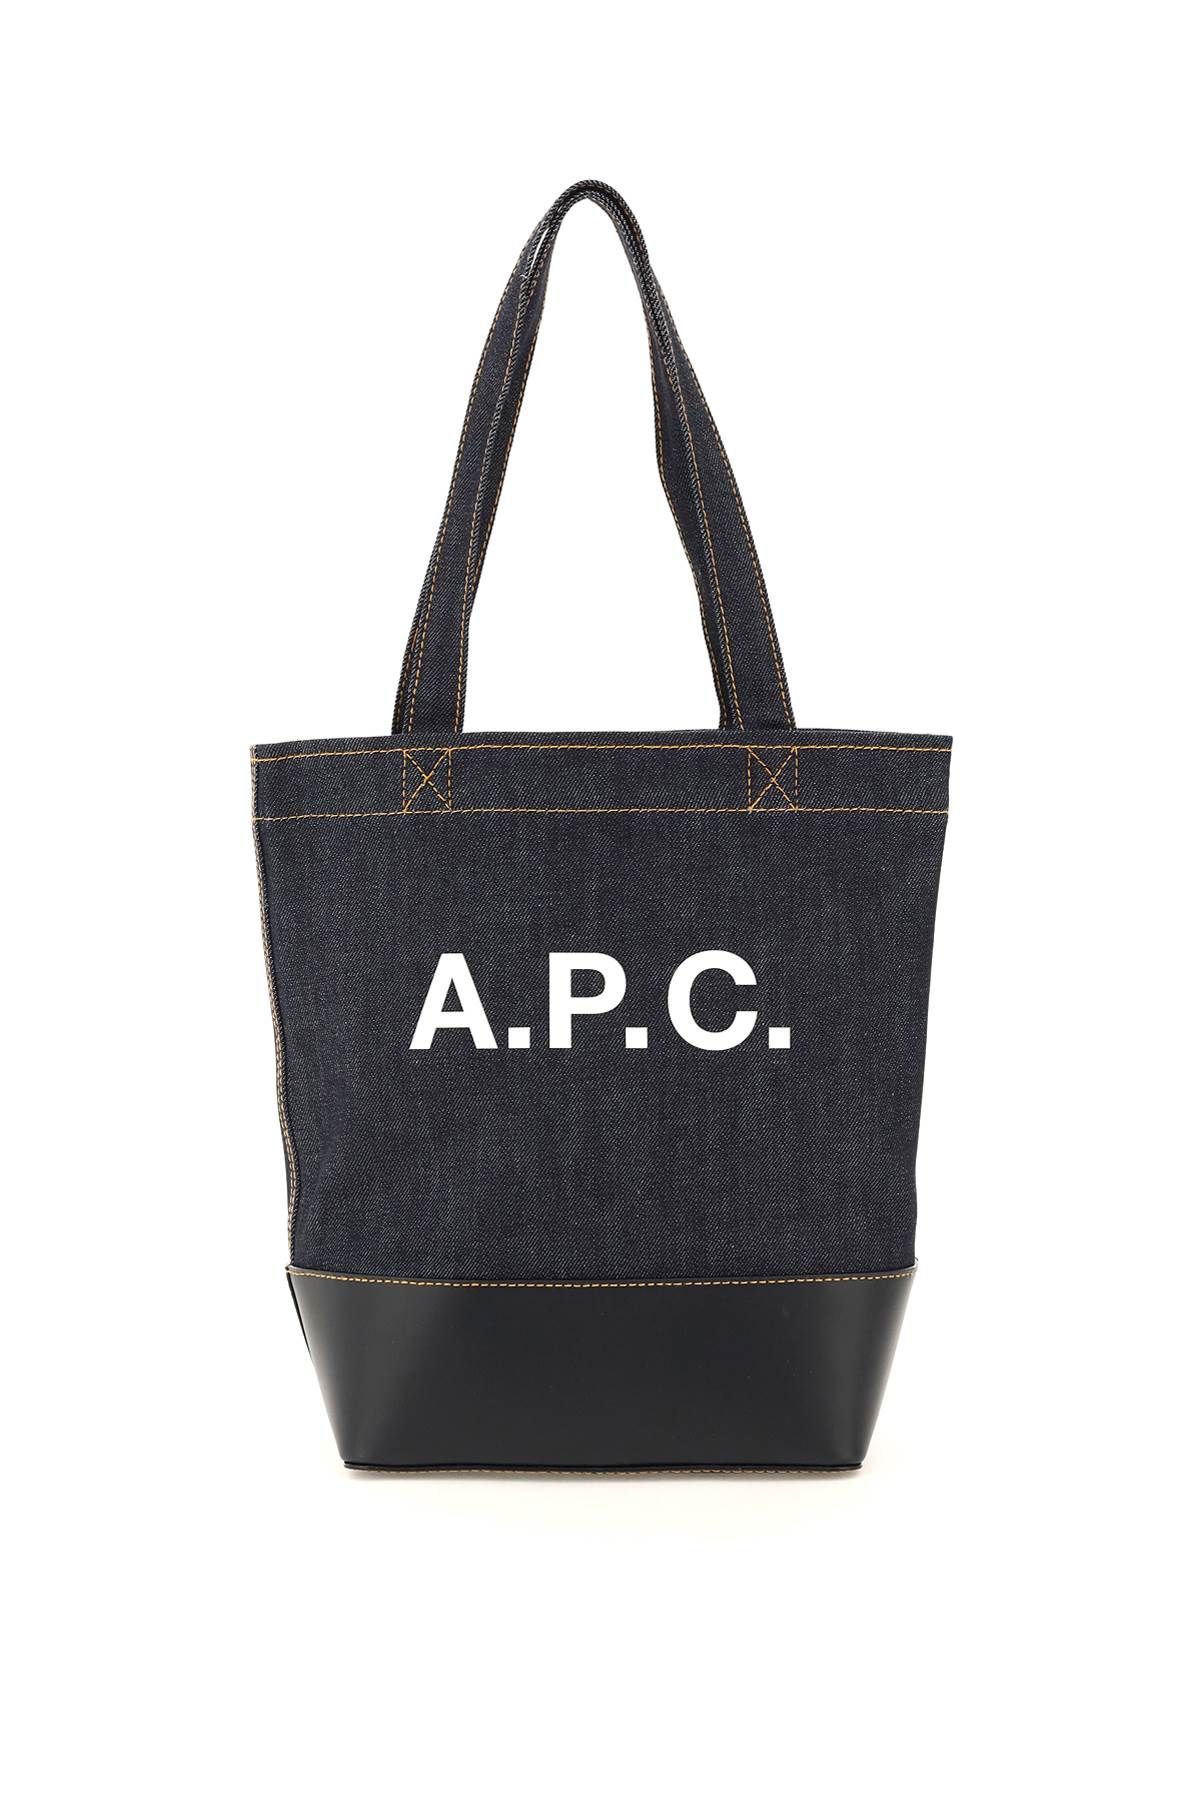 A. P.C. axel small denim tote bag